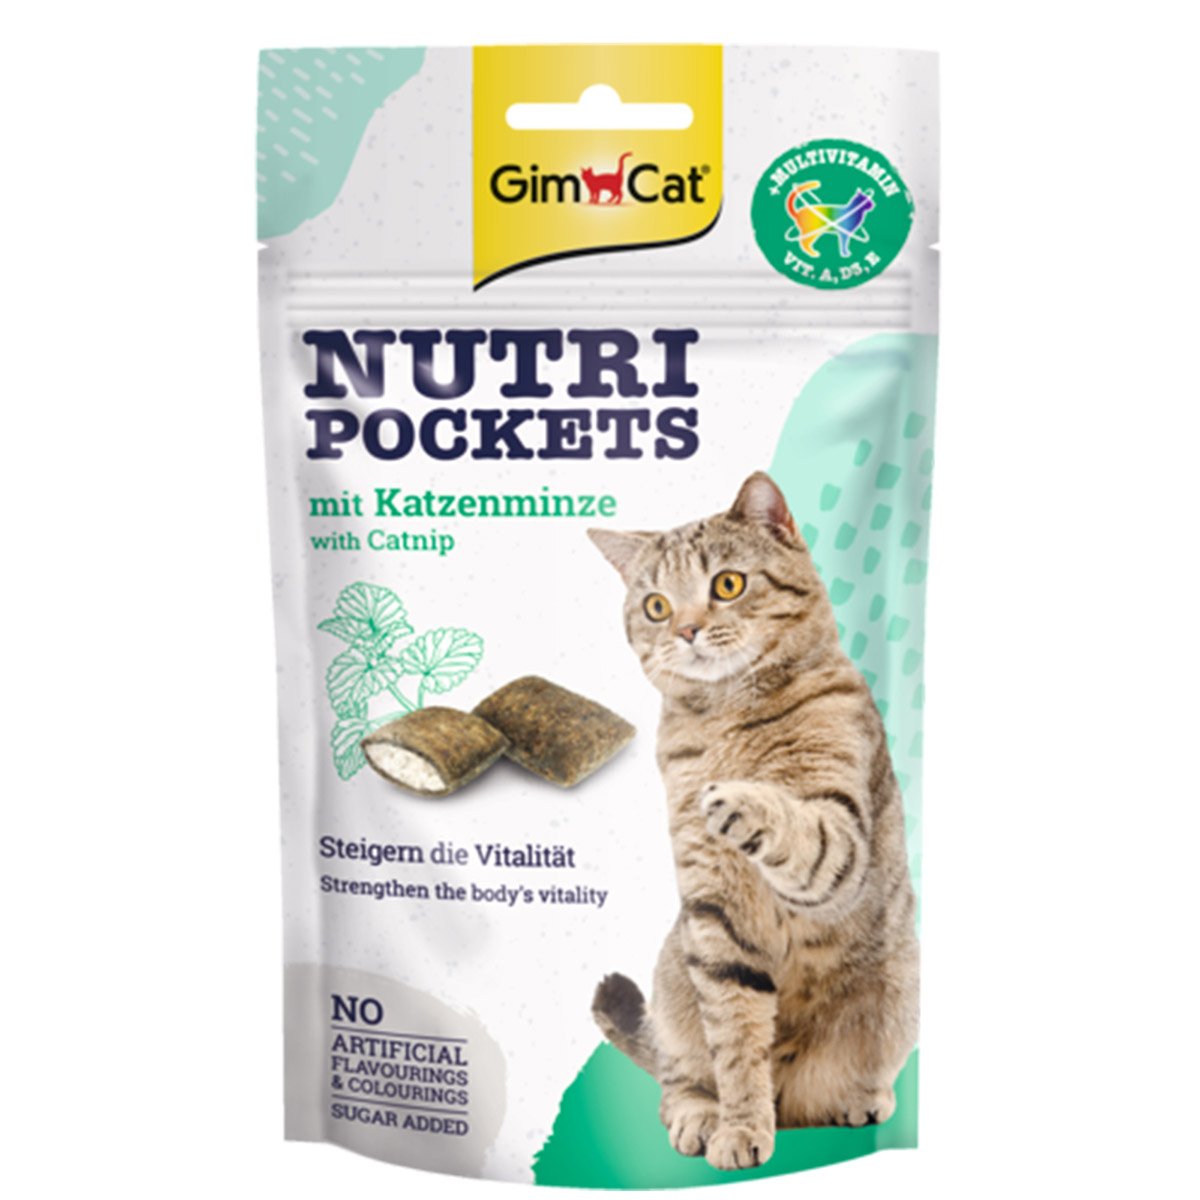 GimCat Nutri Pockets Katzenminze 12x60g von Gimcat